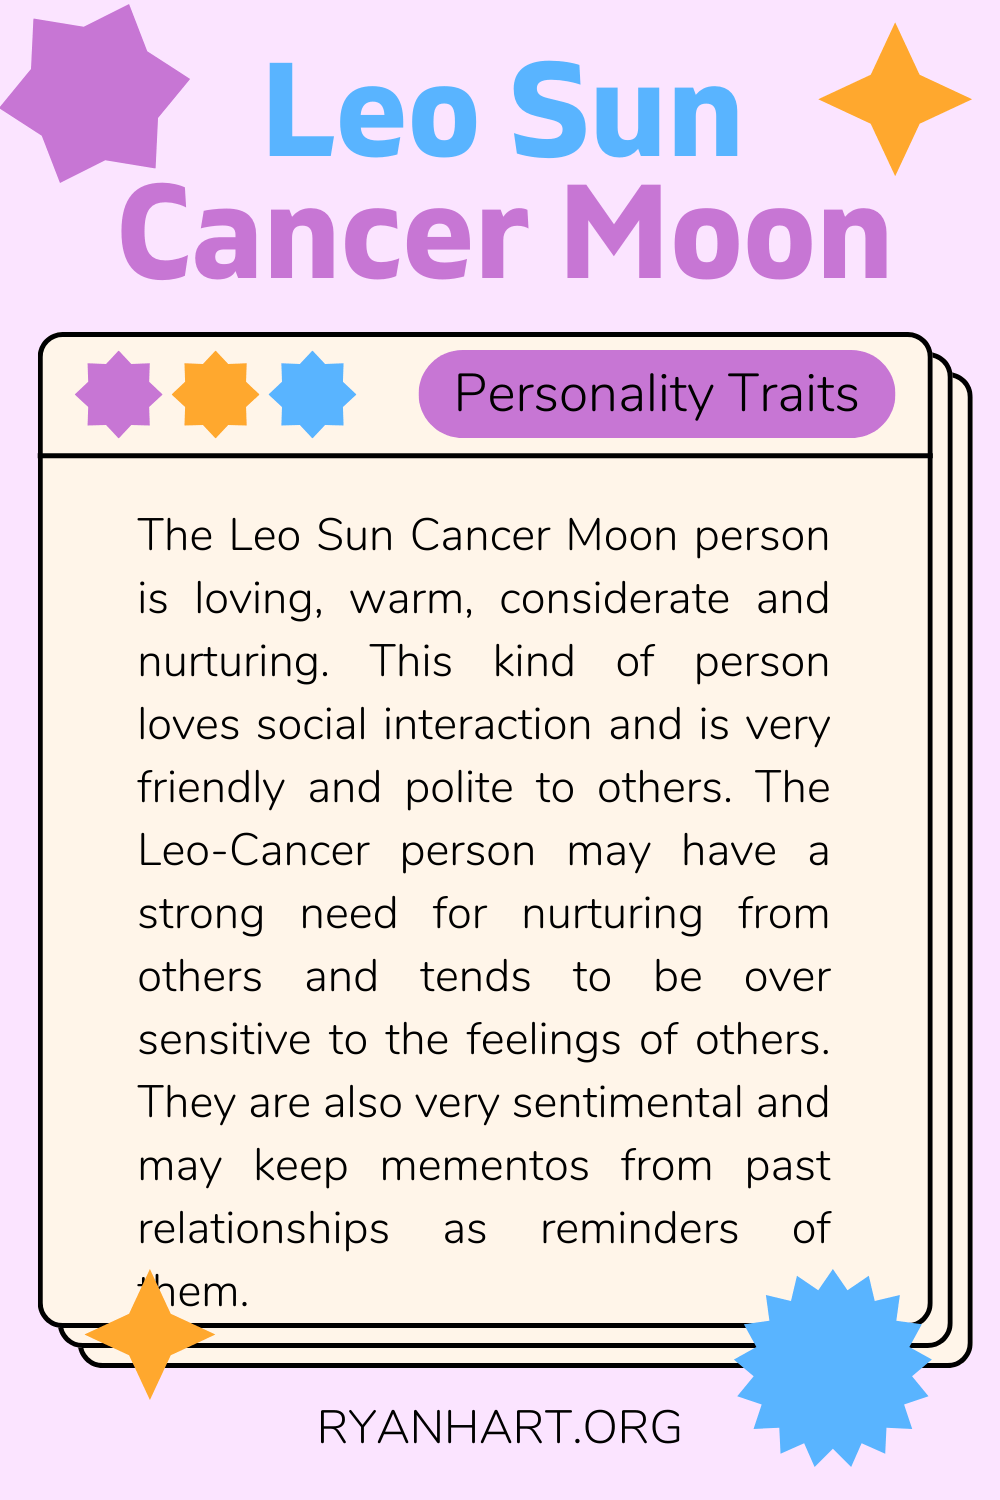 Leo Sun Cancer Moon Description